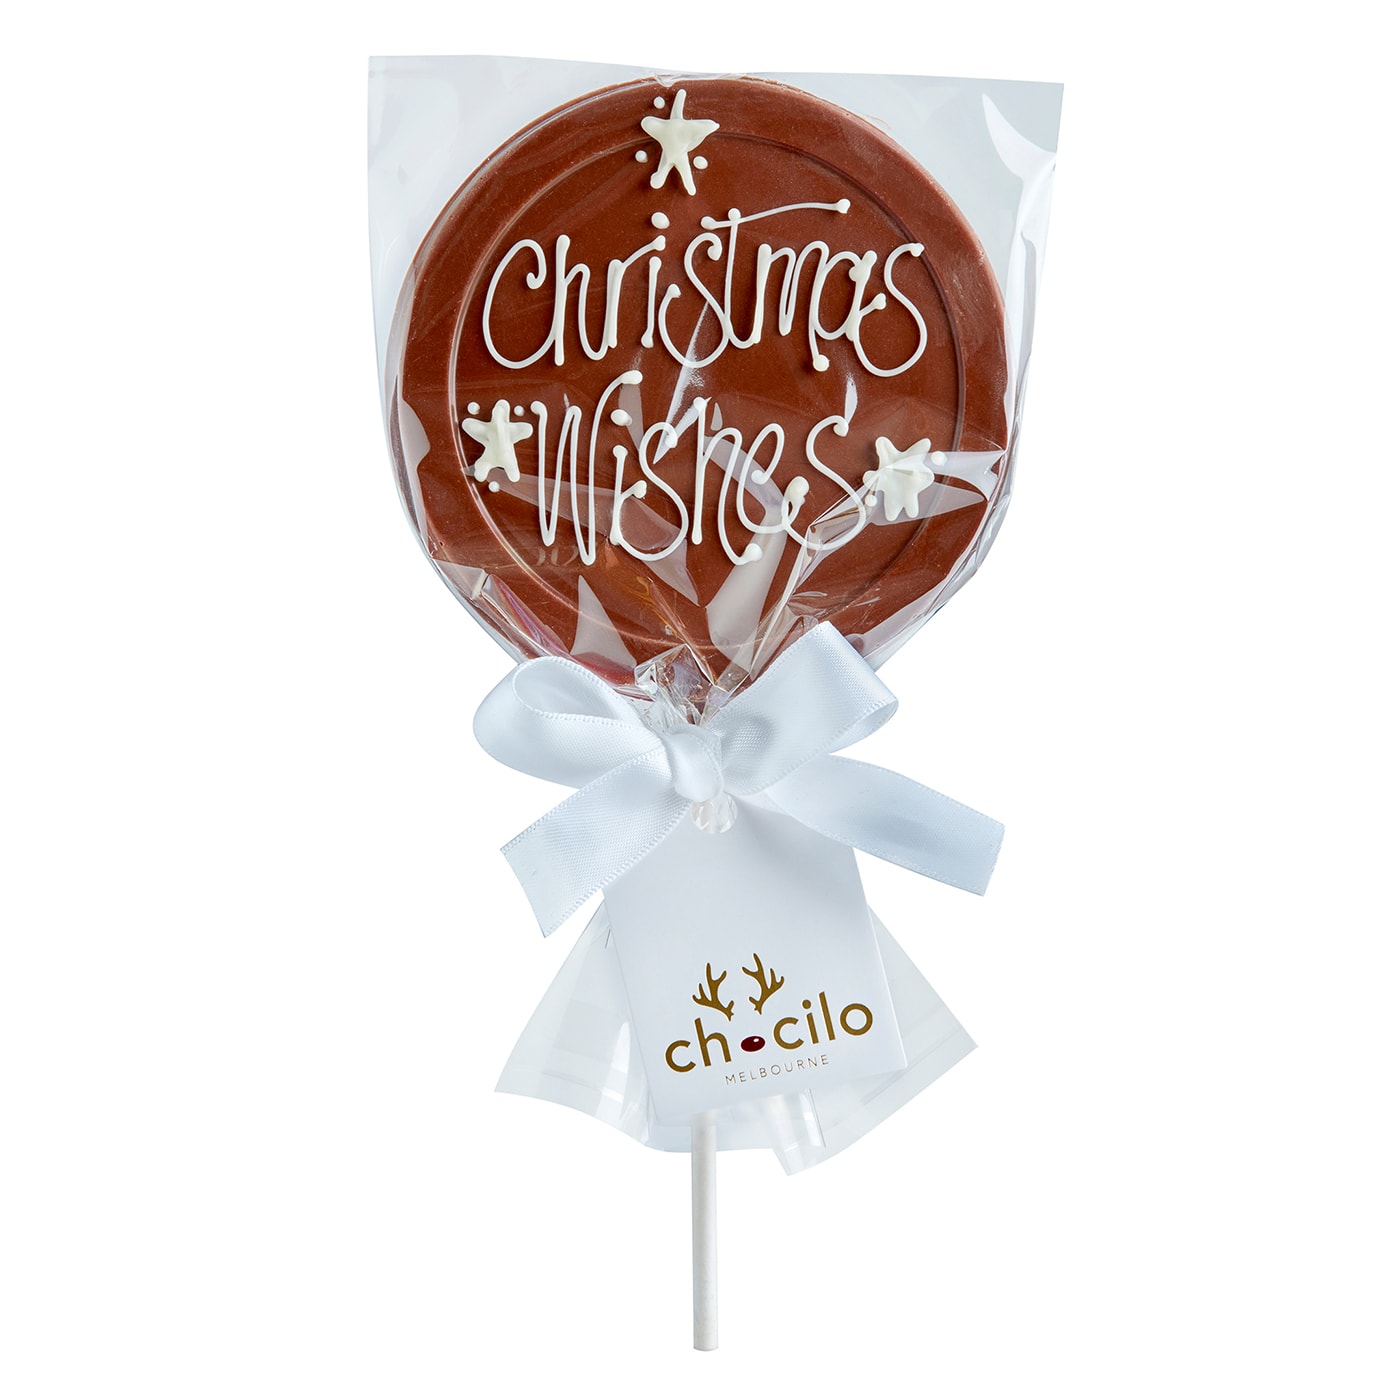 Chocilo Melbourne 45g Christmas Milk Chocolate Lollipop